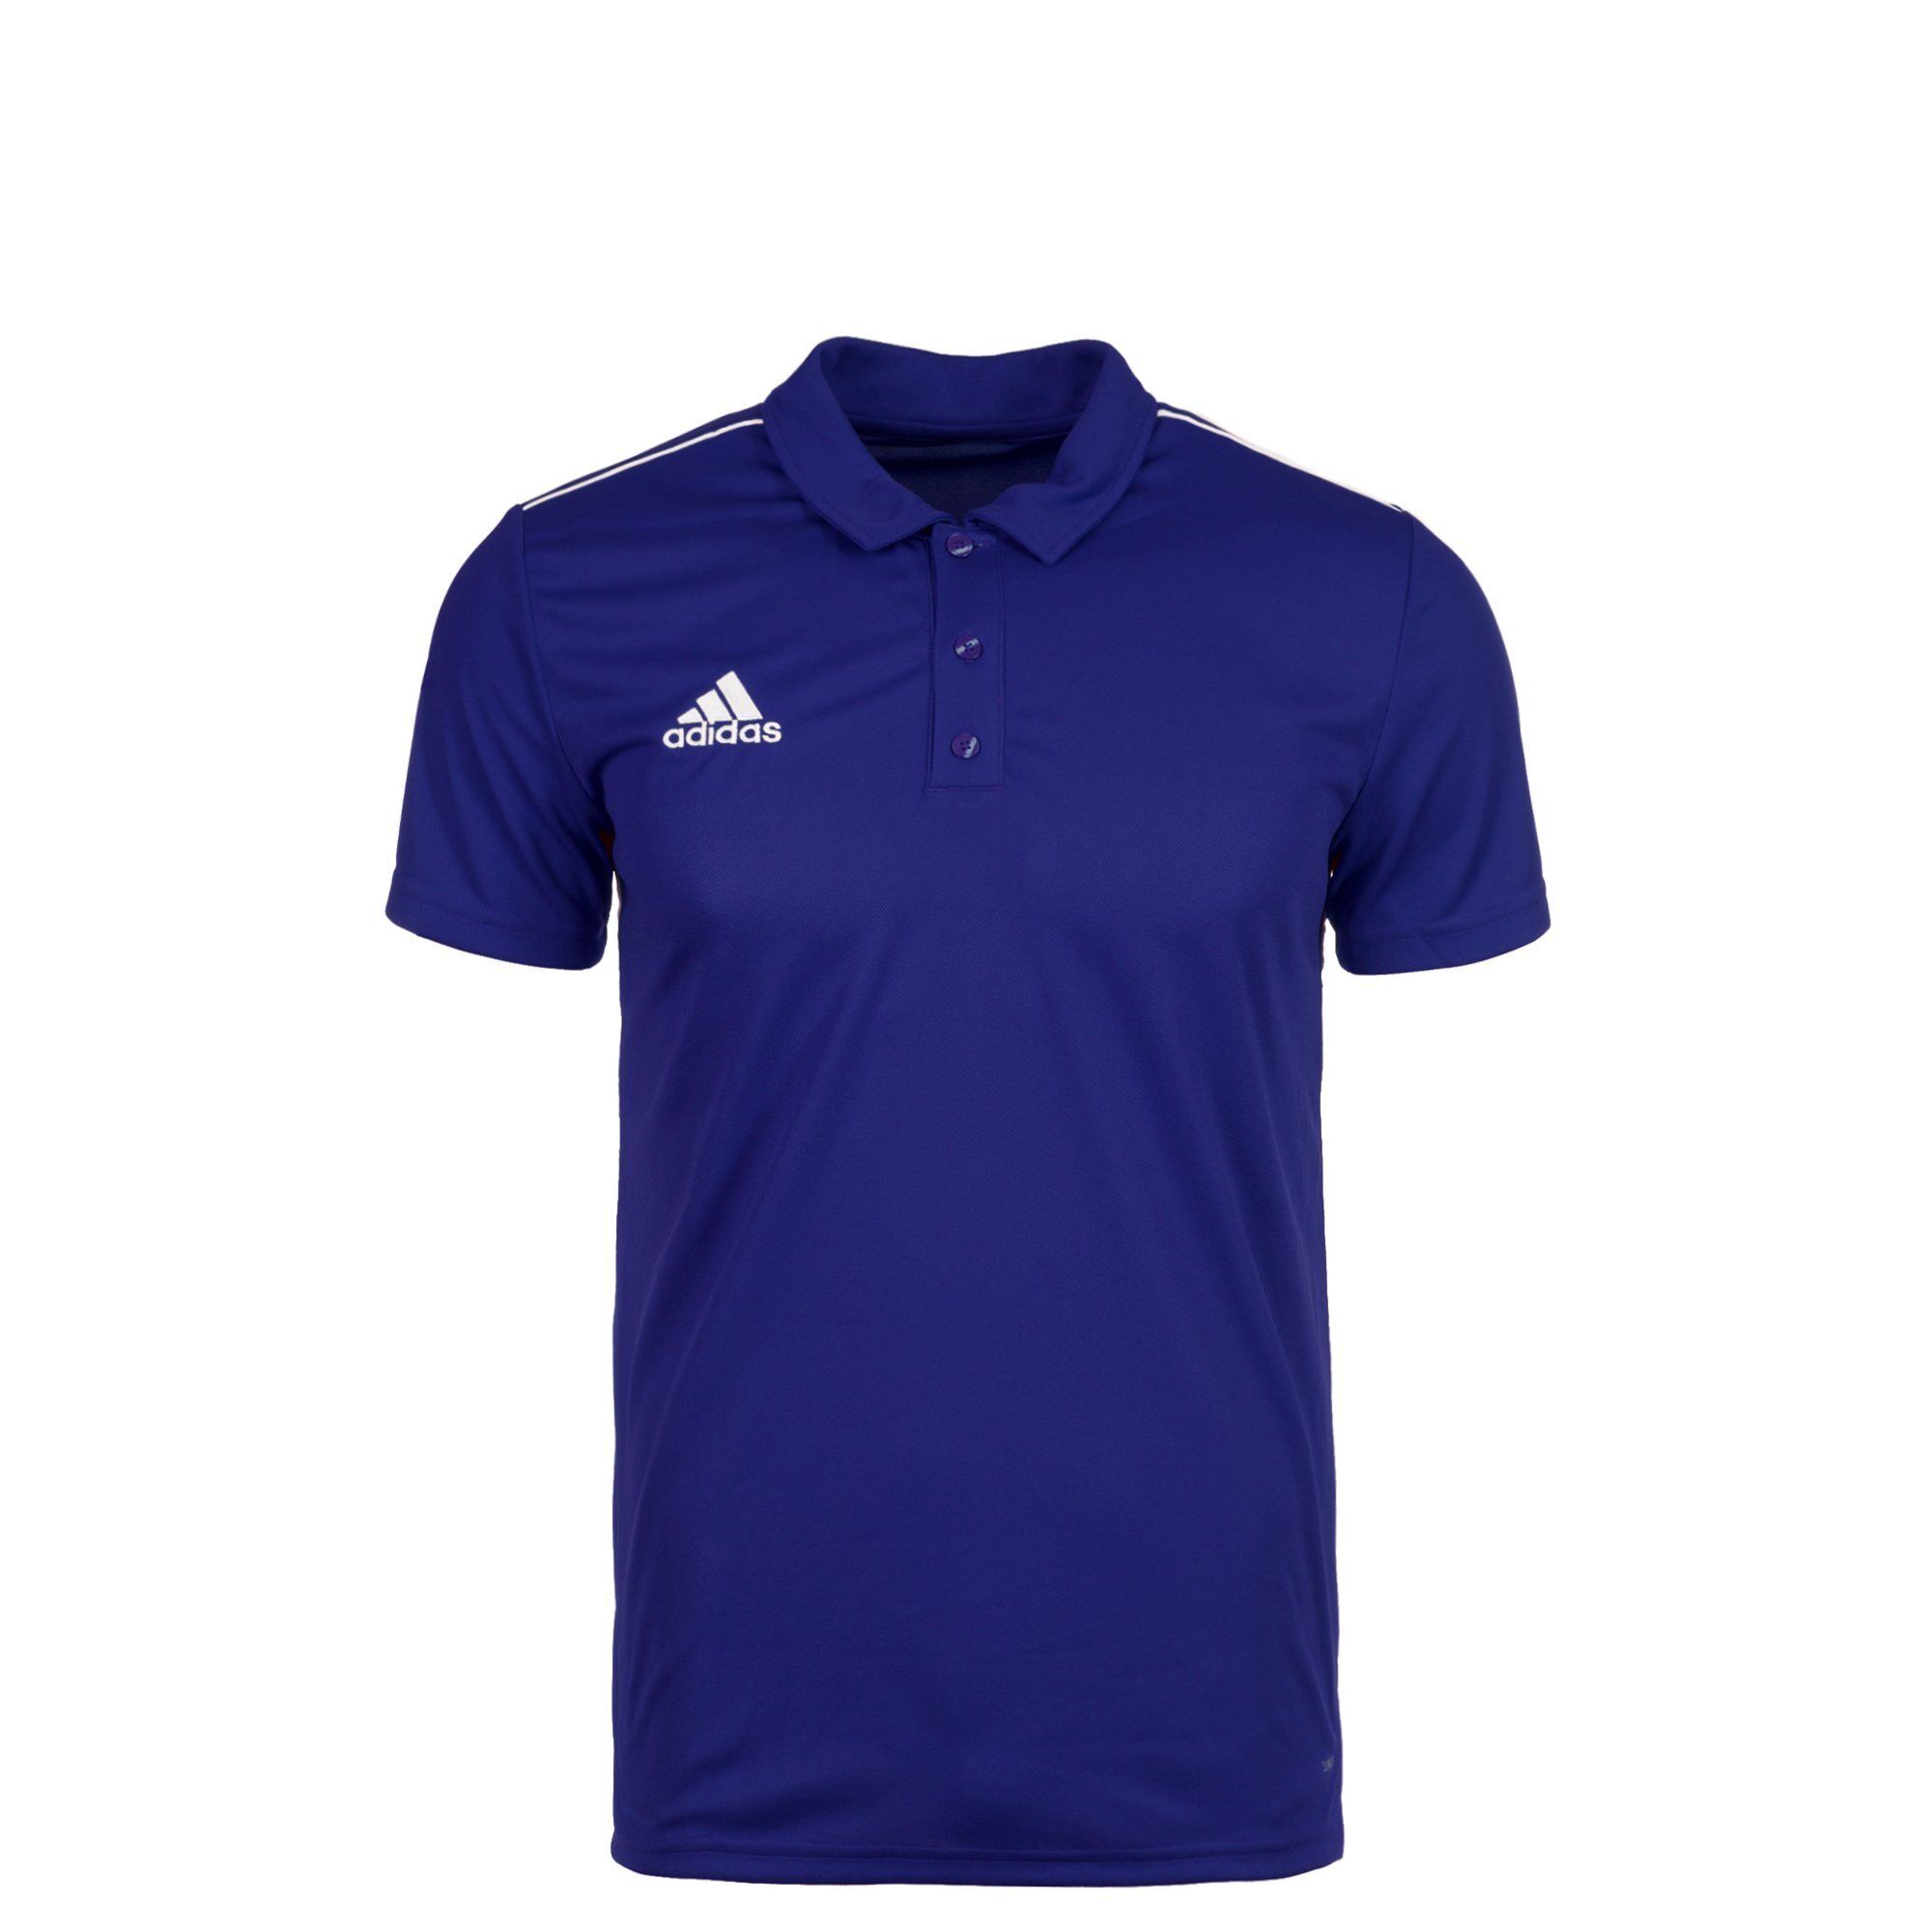 Adidas Performance Poloshirt »Core 18«, dunkelblau-weiß